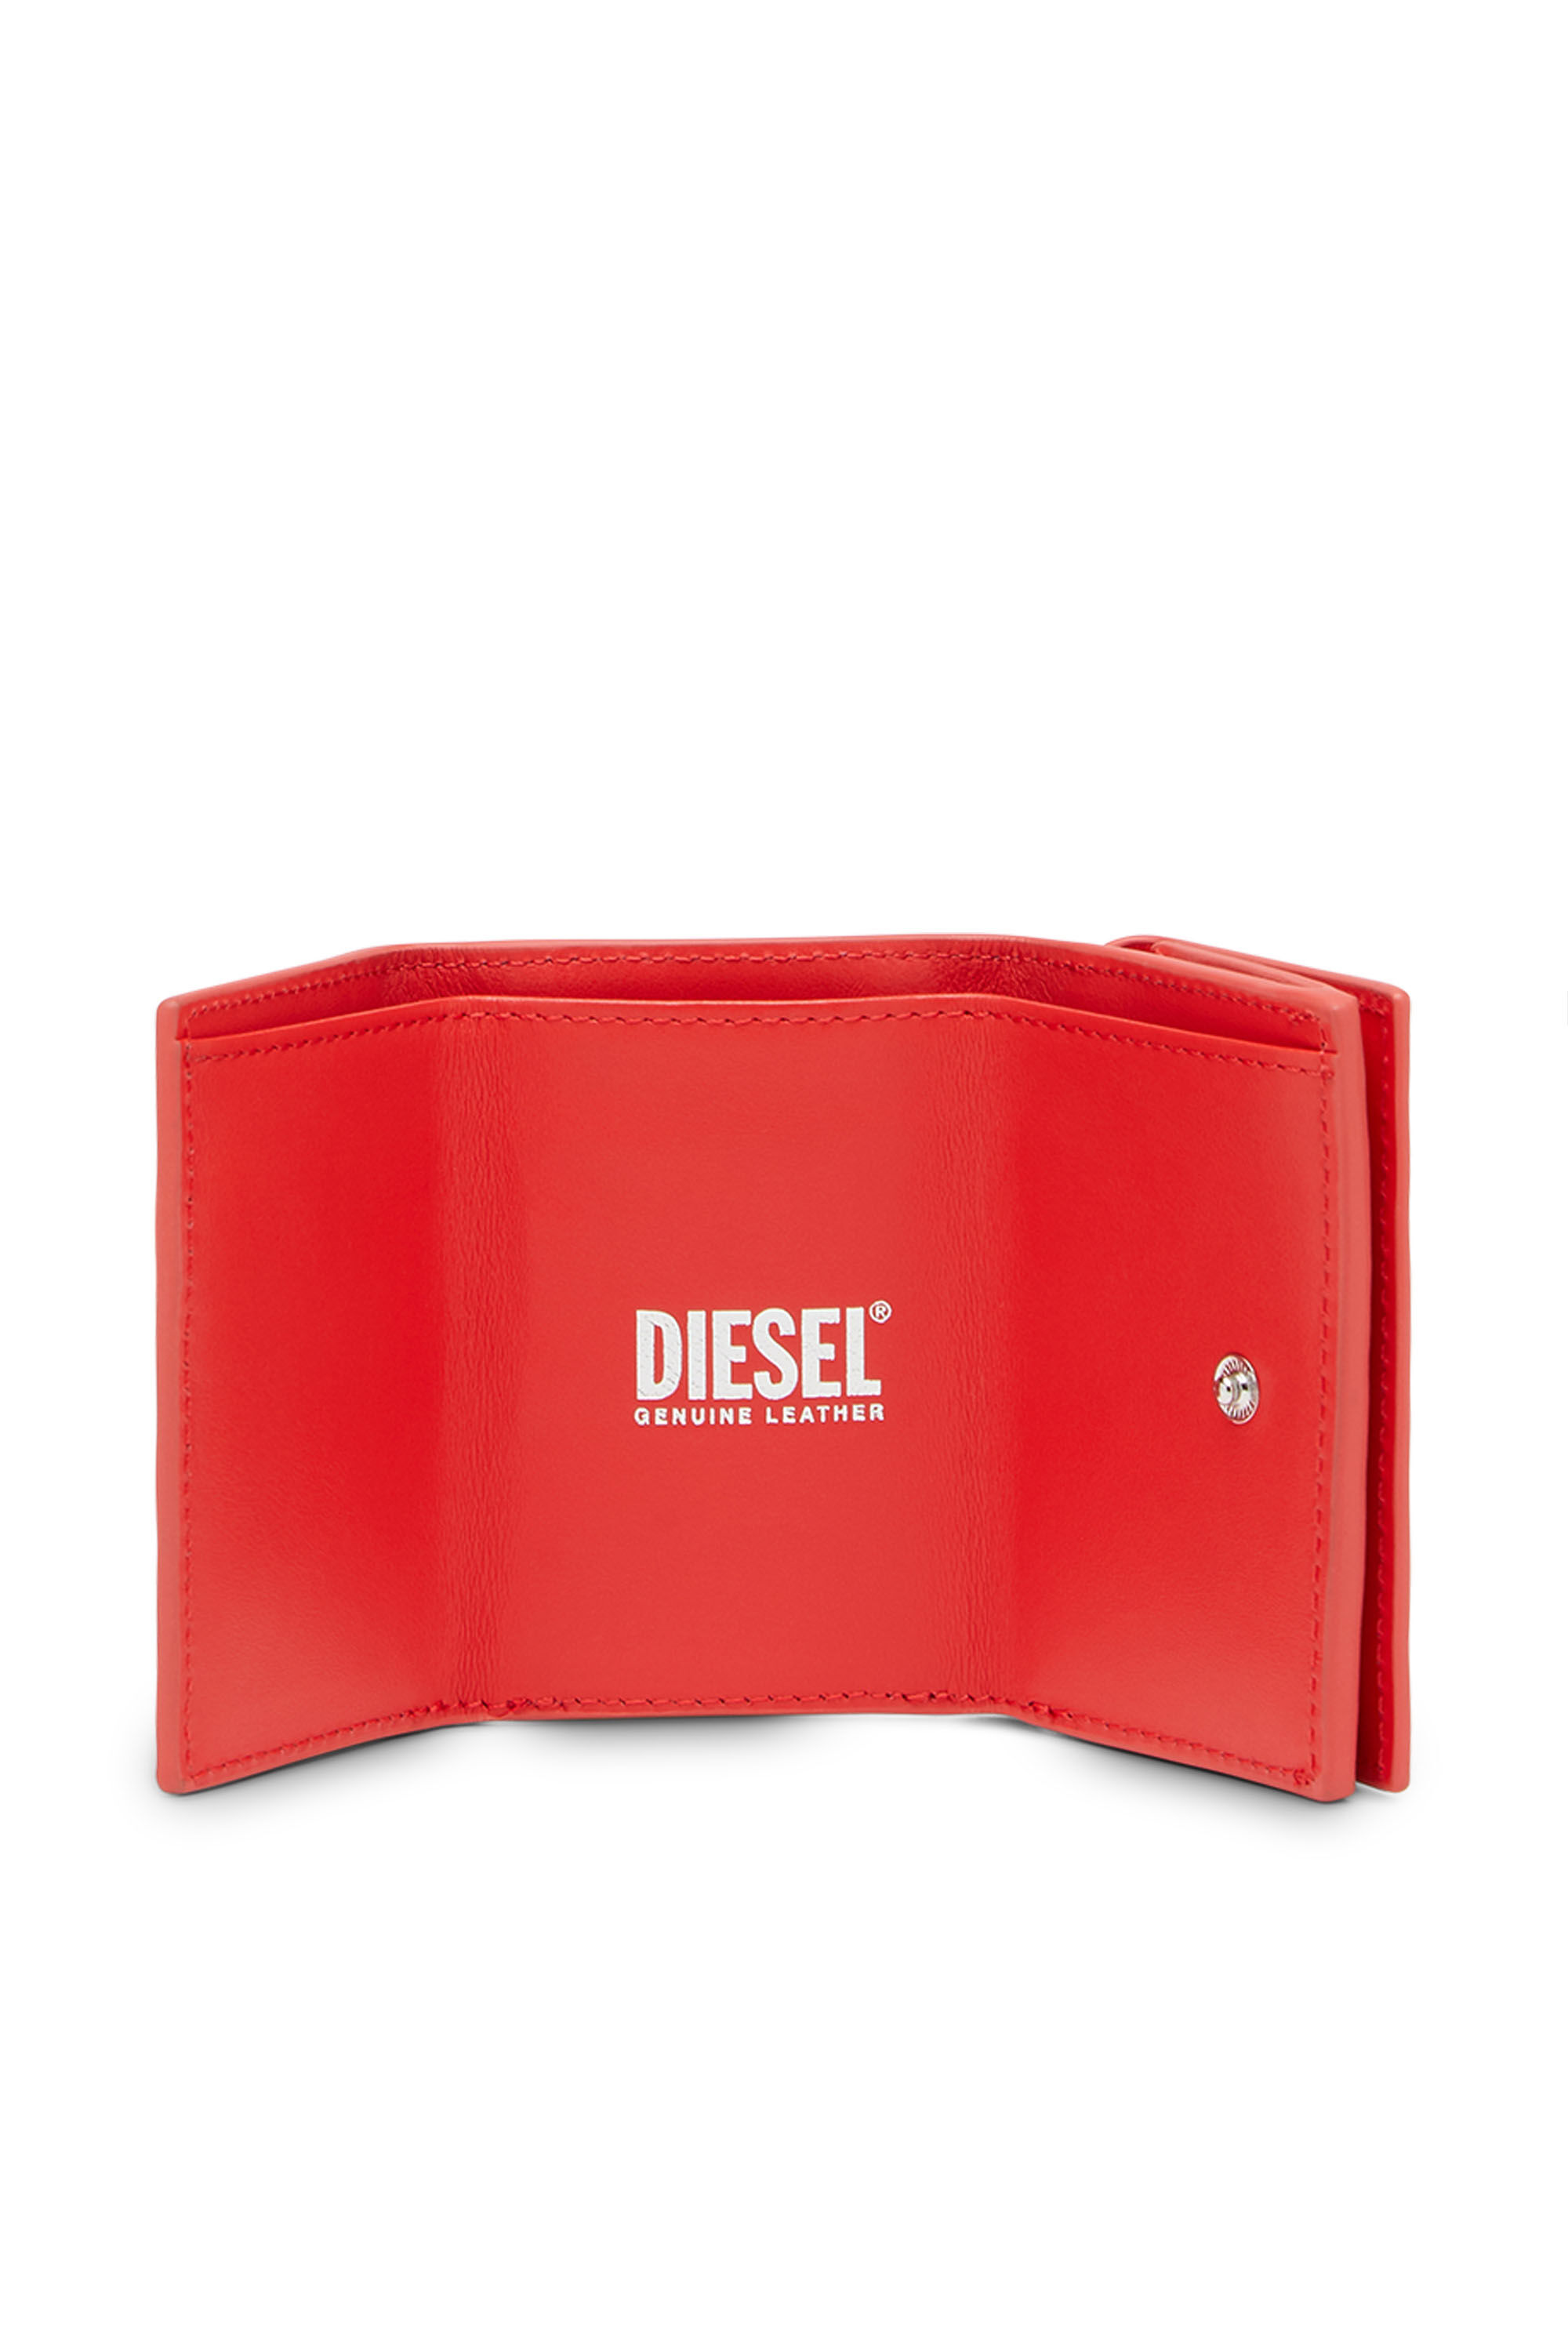 Diesel - LORETTINA, Rouge - Image 3